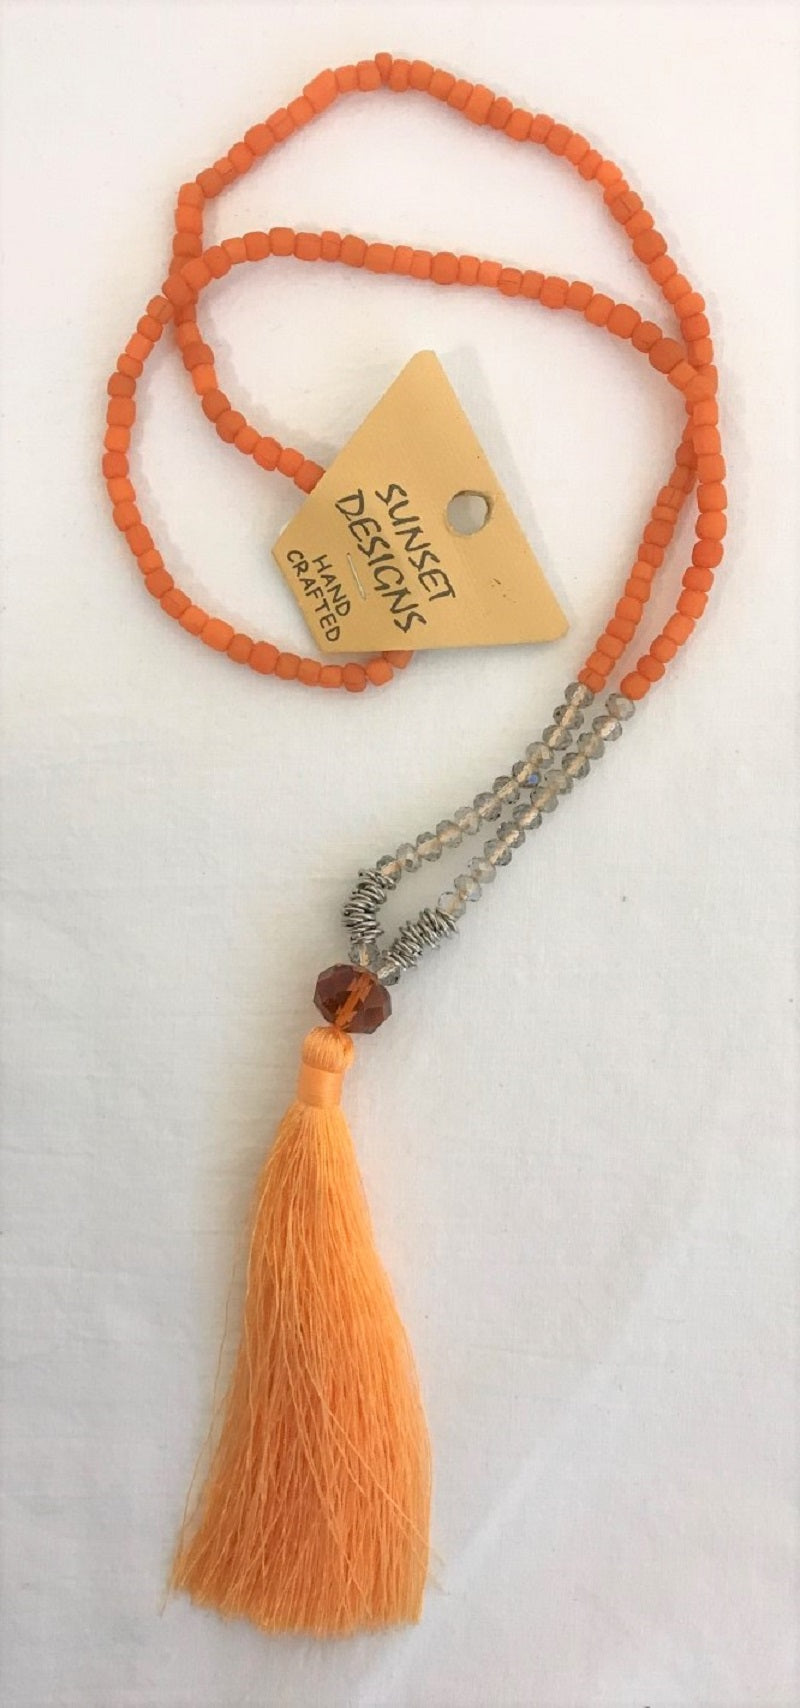 necklace - orange - crystal beads clear & metal ring beads - orange bead & tassle